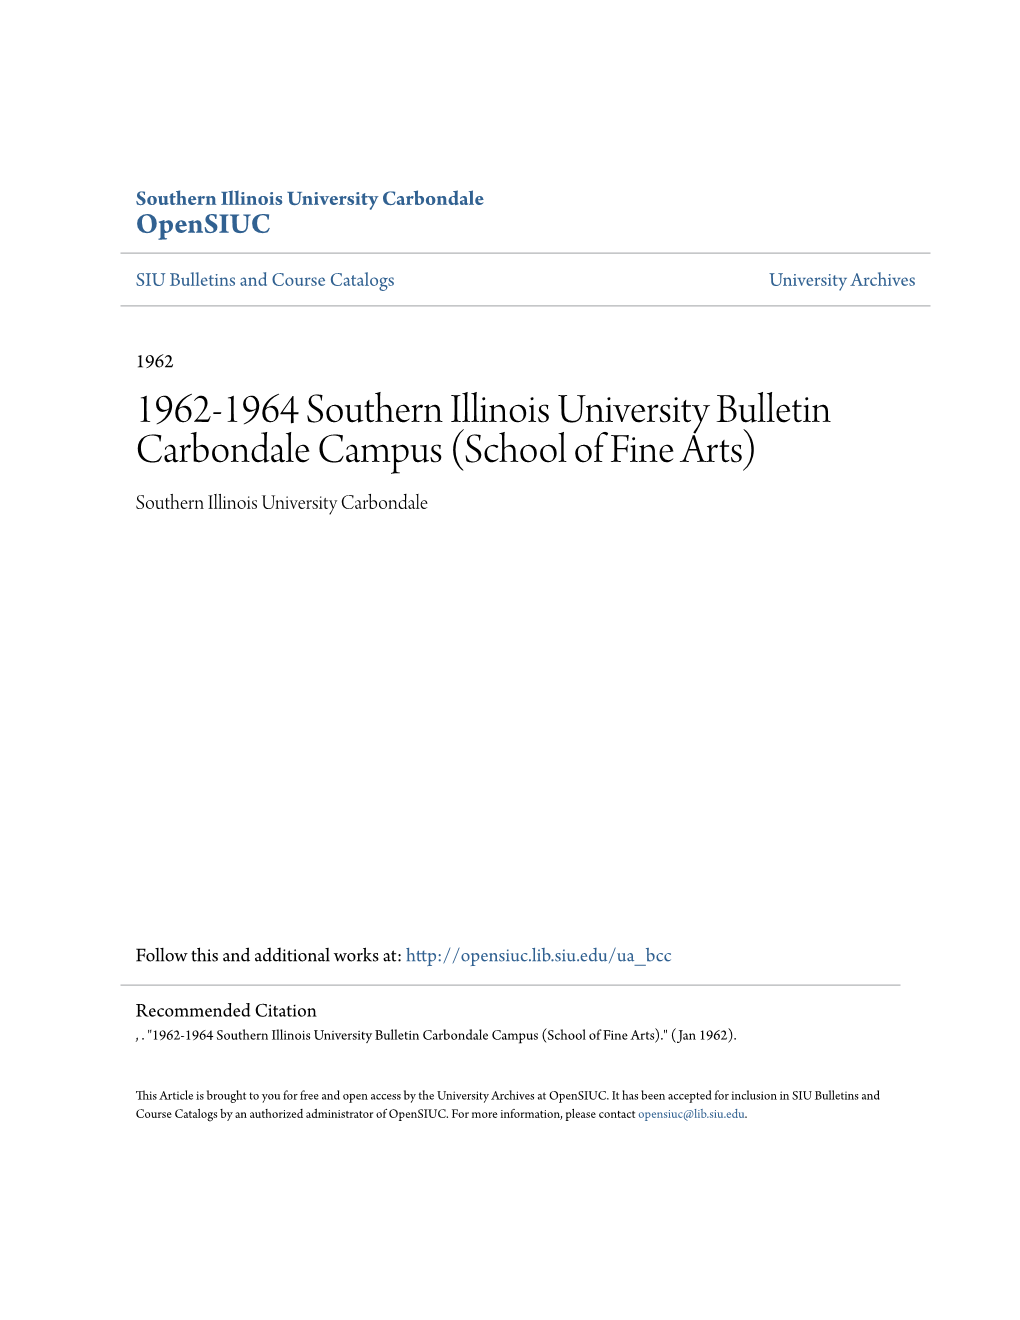 1962-1964 Southern Illinois University Bulletin Carbondale Campus (School of Fine Arts) Southern Illinois University Carbondale